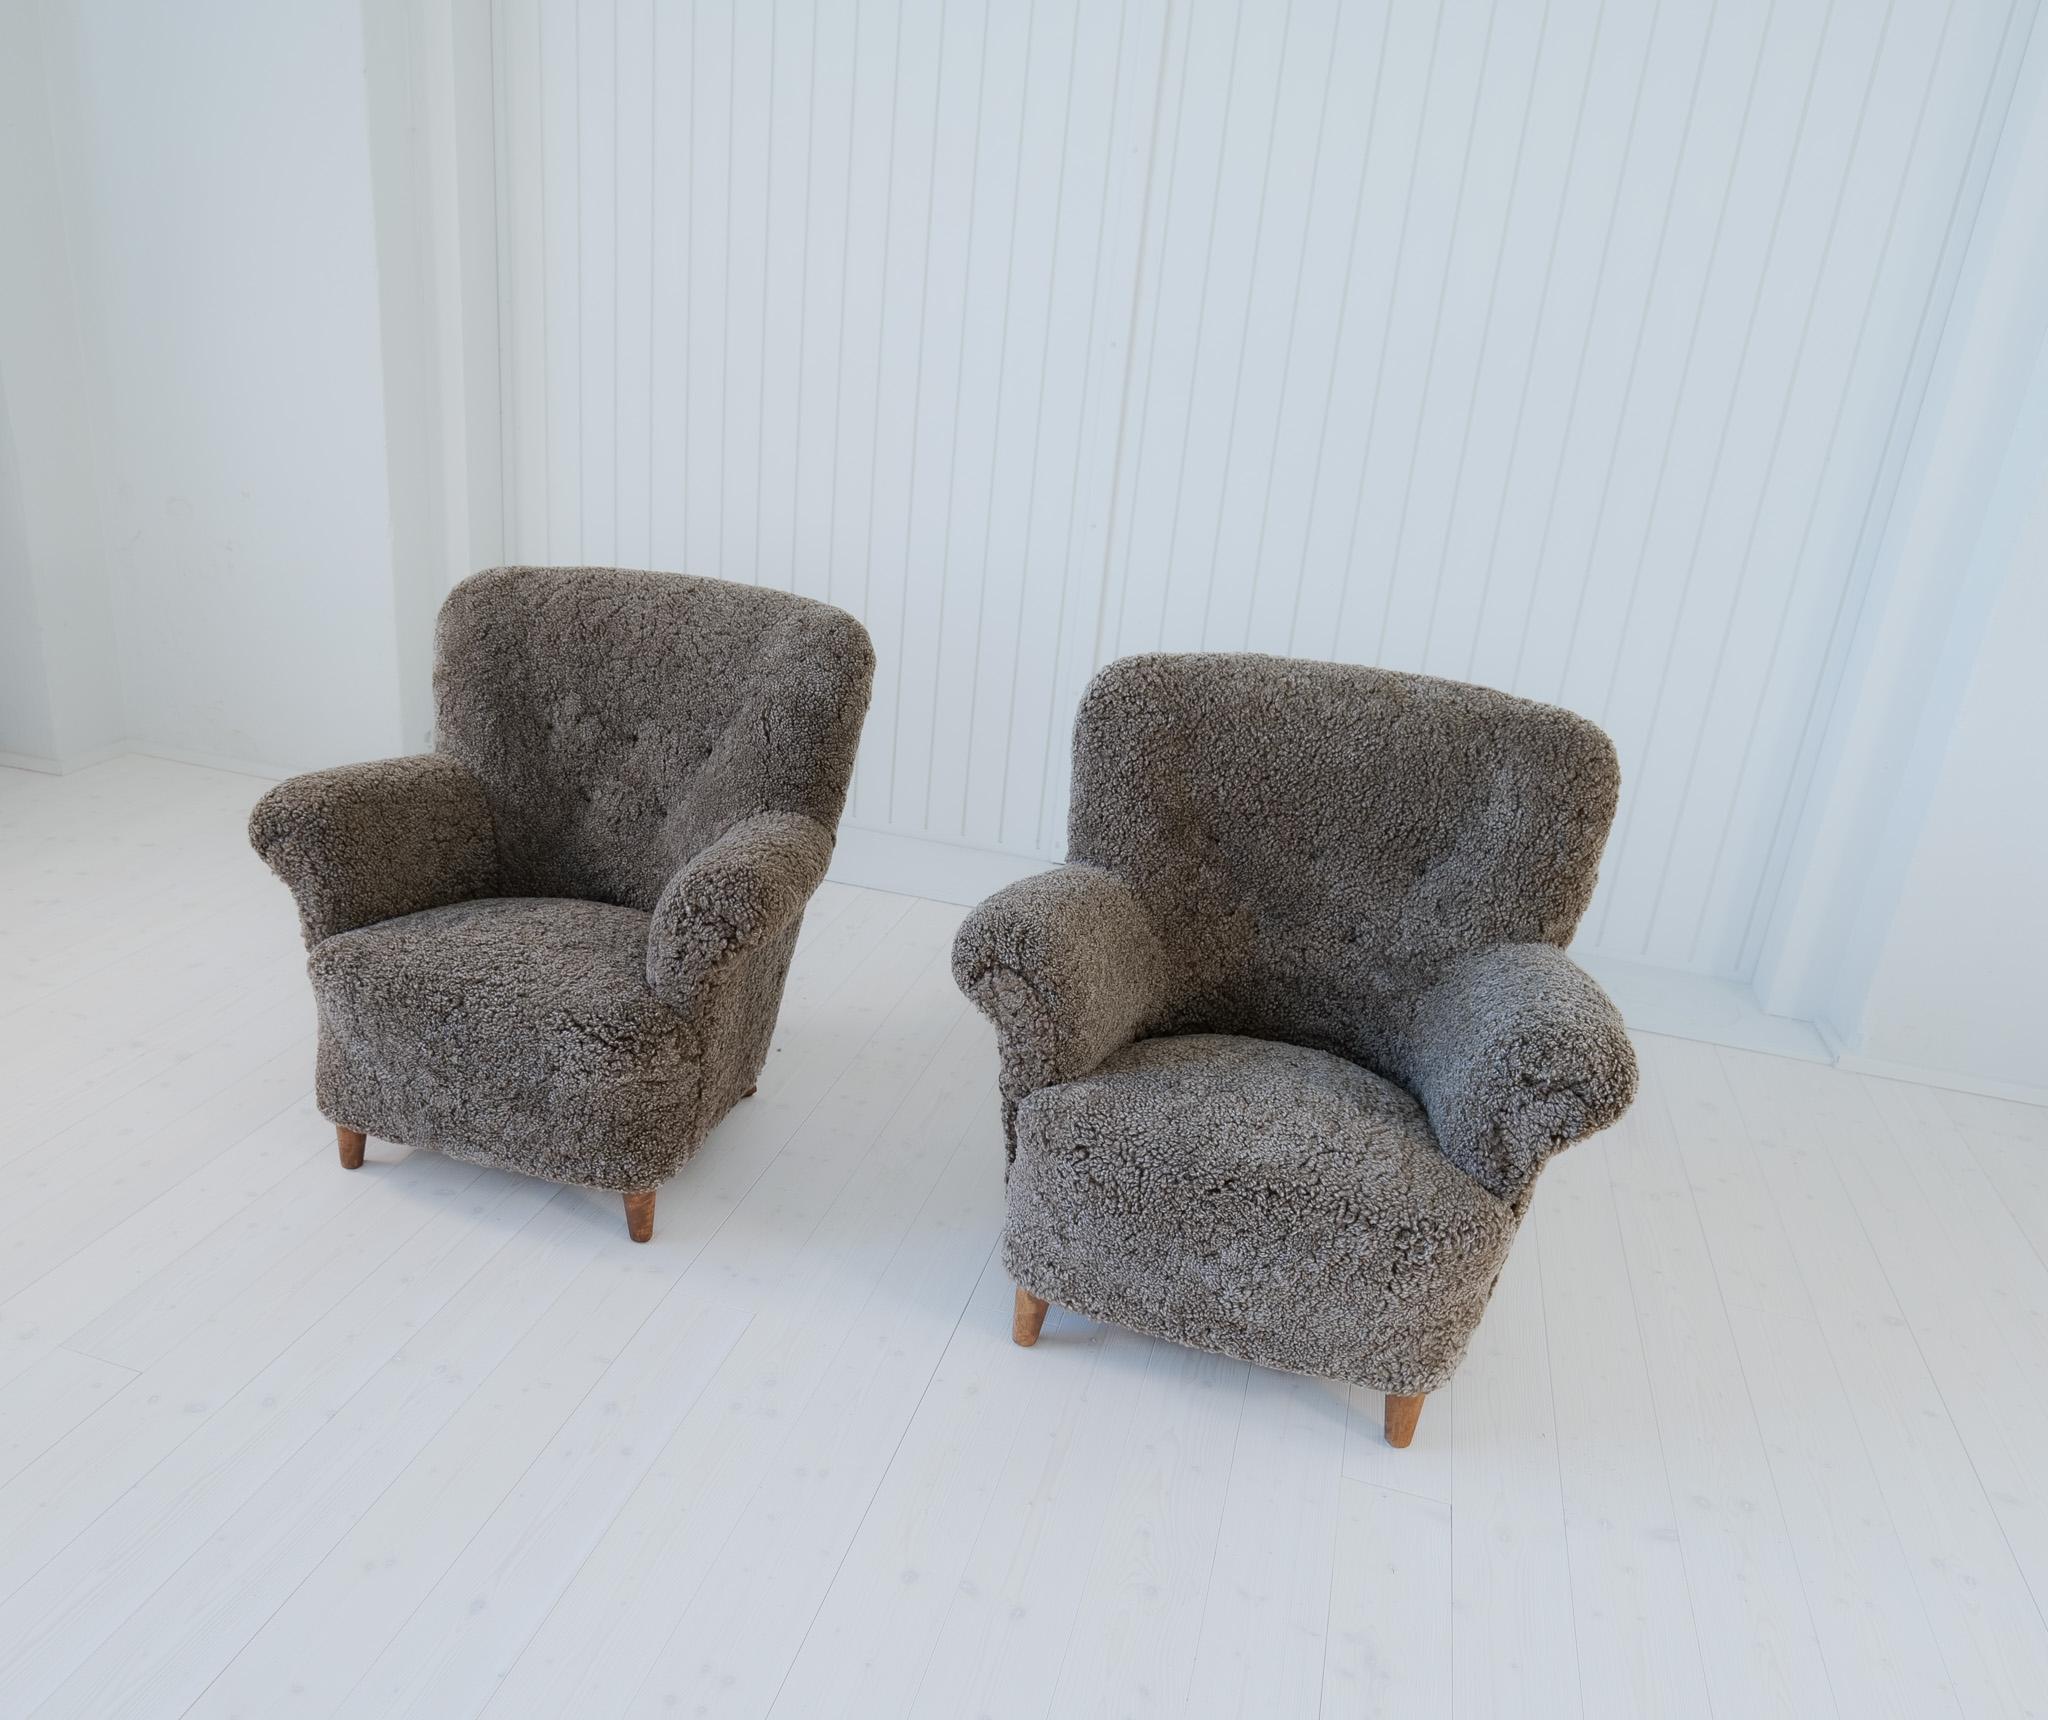 Swedish Scandinavian Modern Lounge Chairs in Grey/Black Sheepskin Shearling Sweden, 1940 For Sale